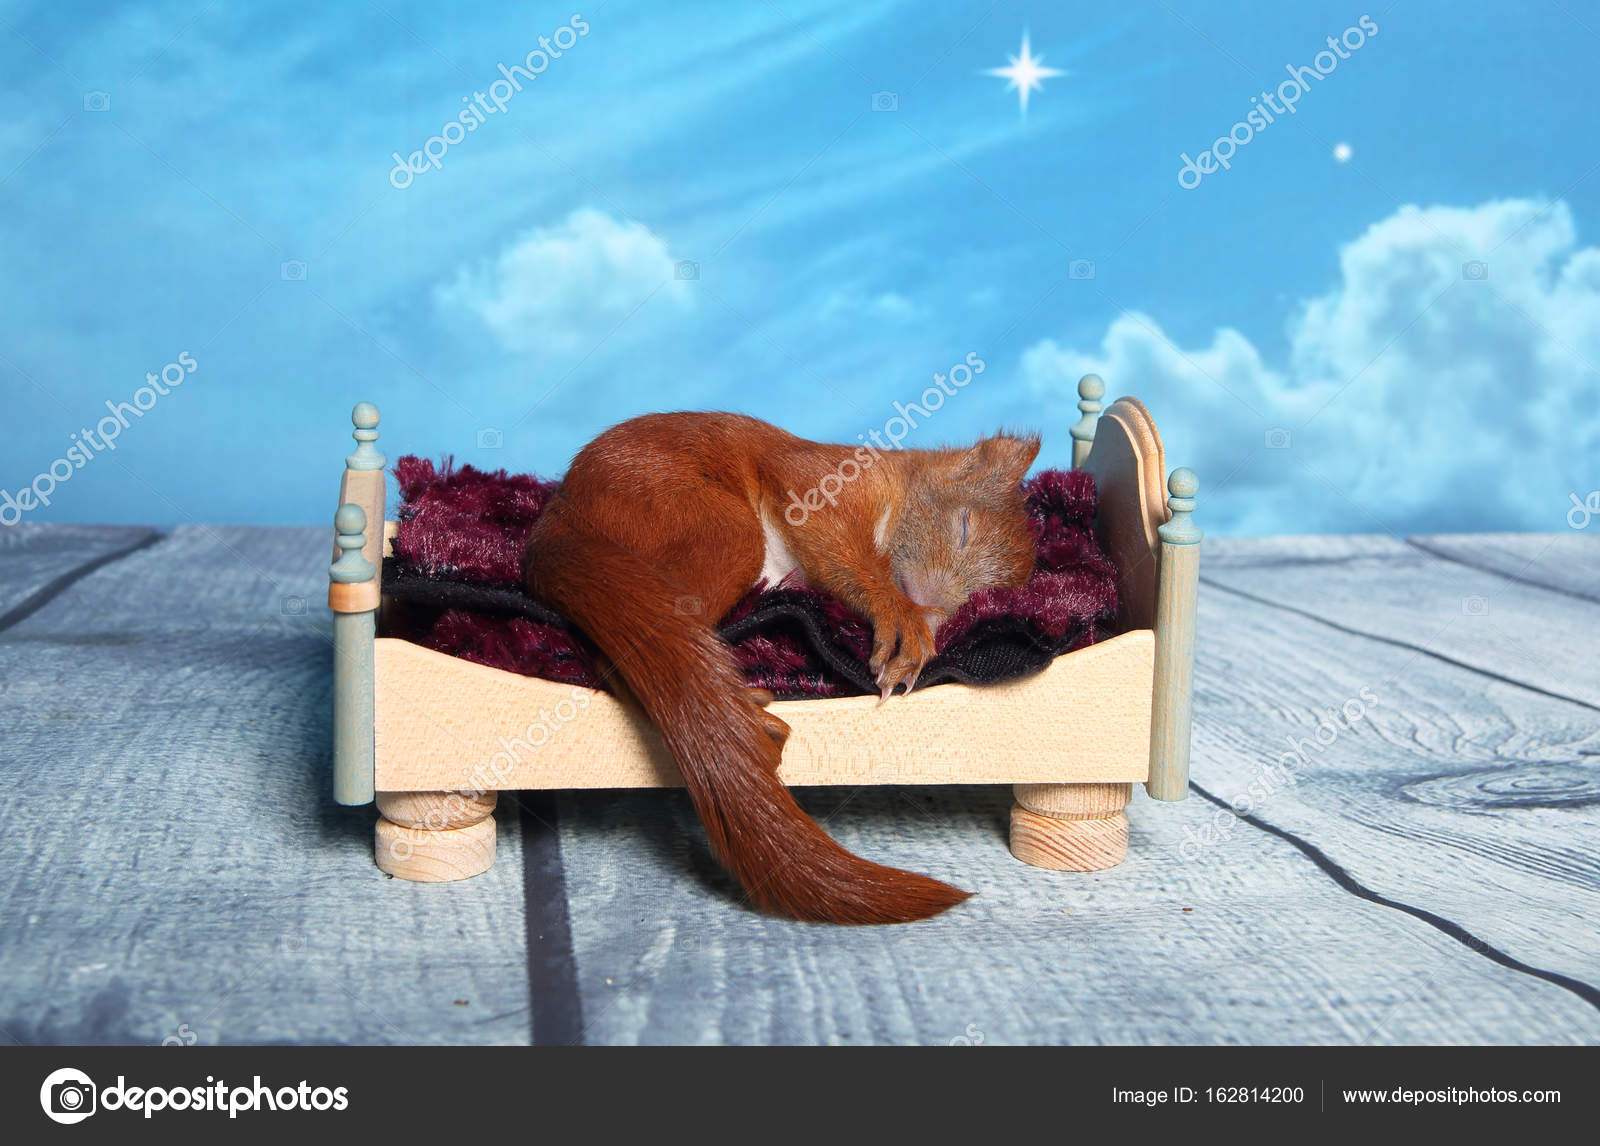 depositphotos_162814200-stock-photo-squirrel-sleeping-in-a-bed.jpg